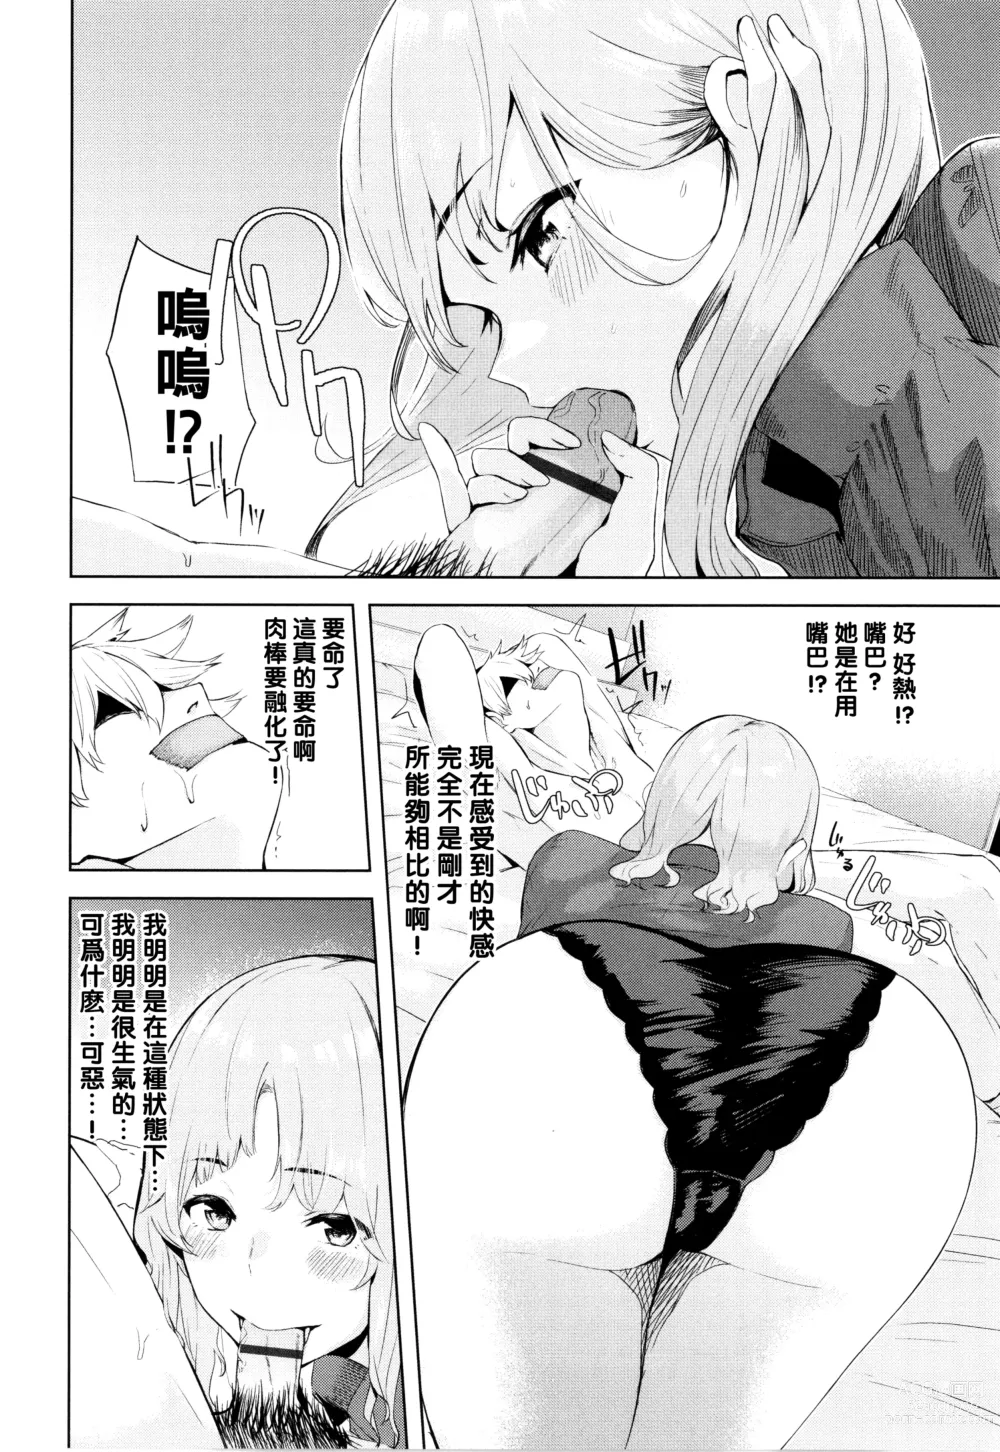 Page 8 of manga Mekakushi